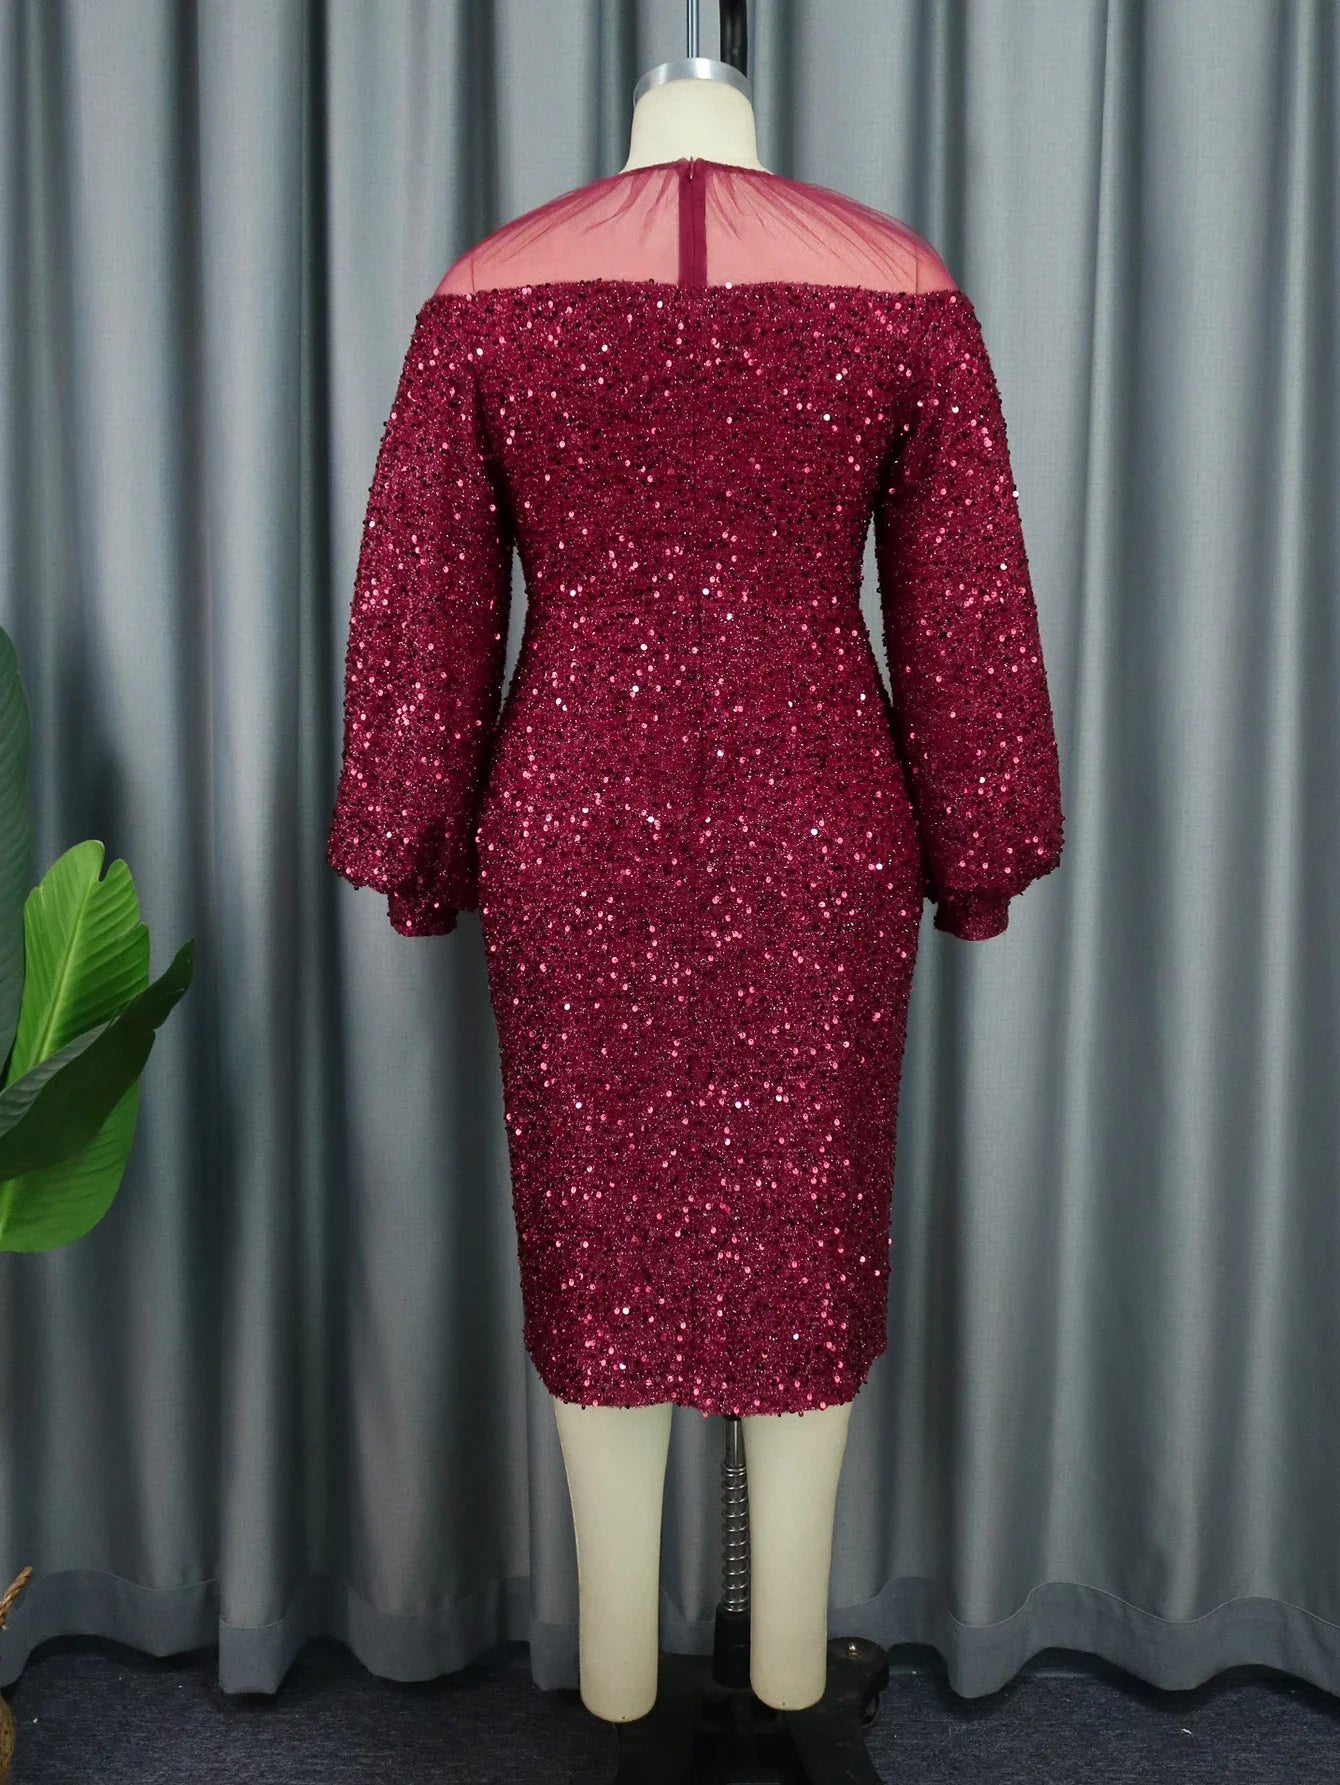 Plus Size Women's Burgundy Glitter Dress